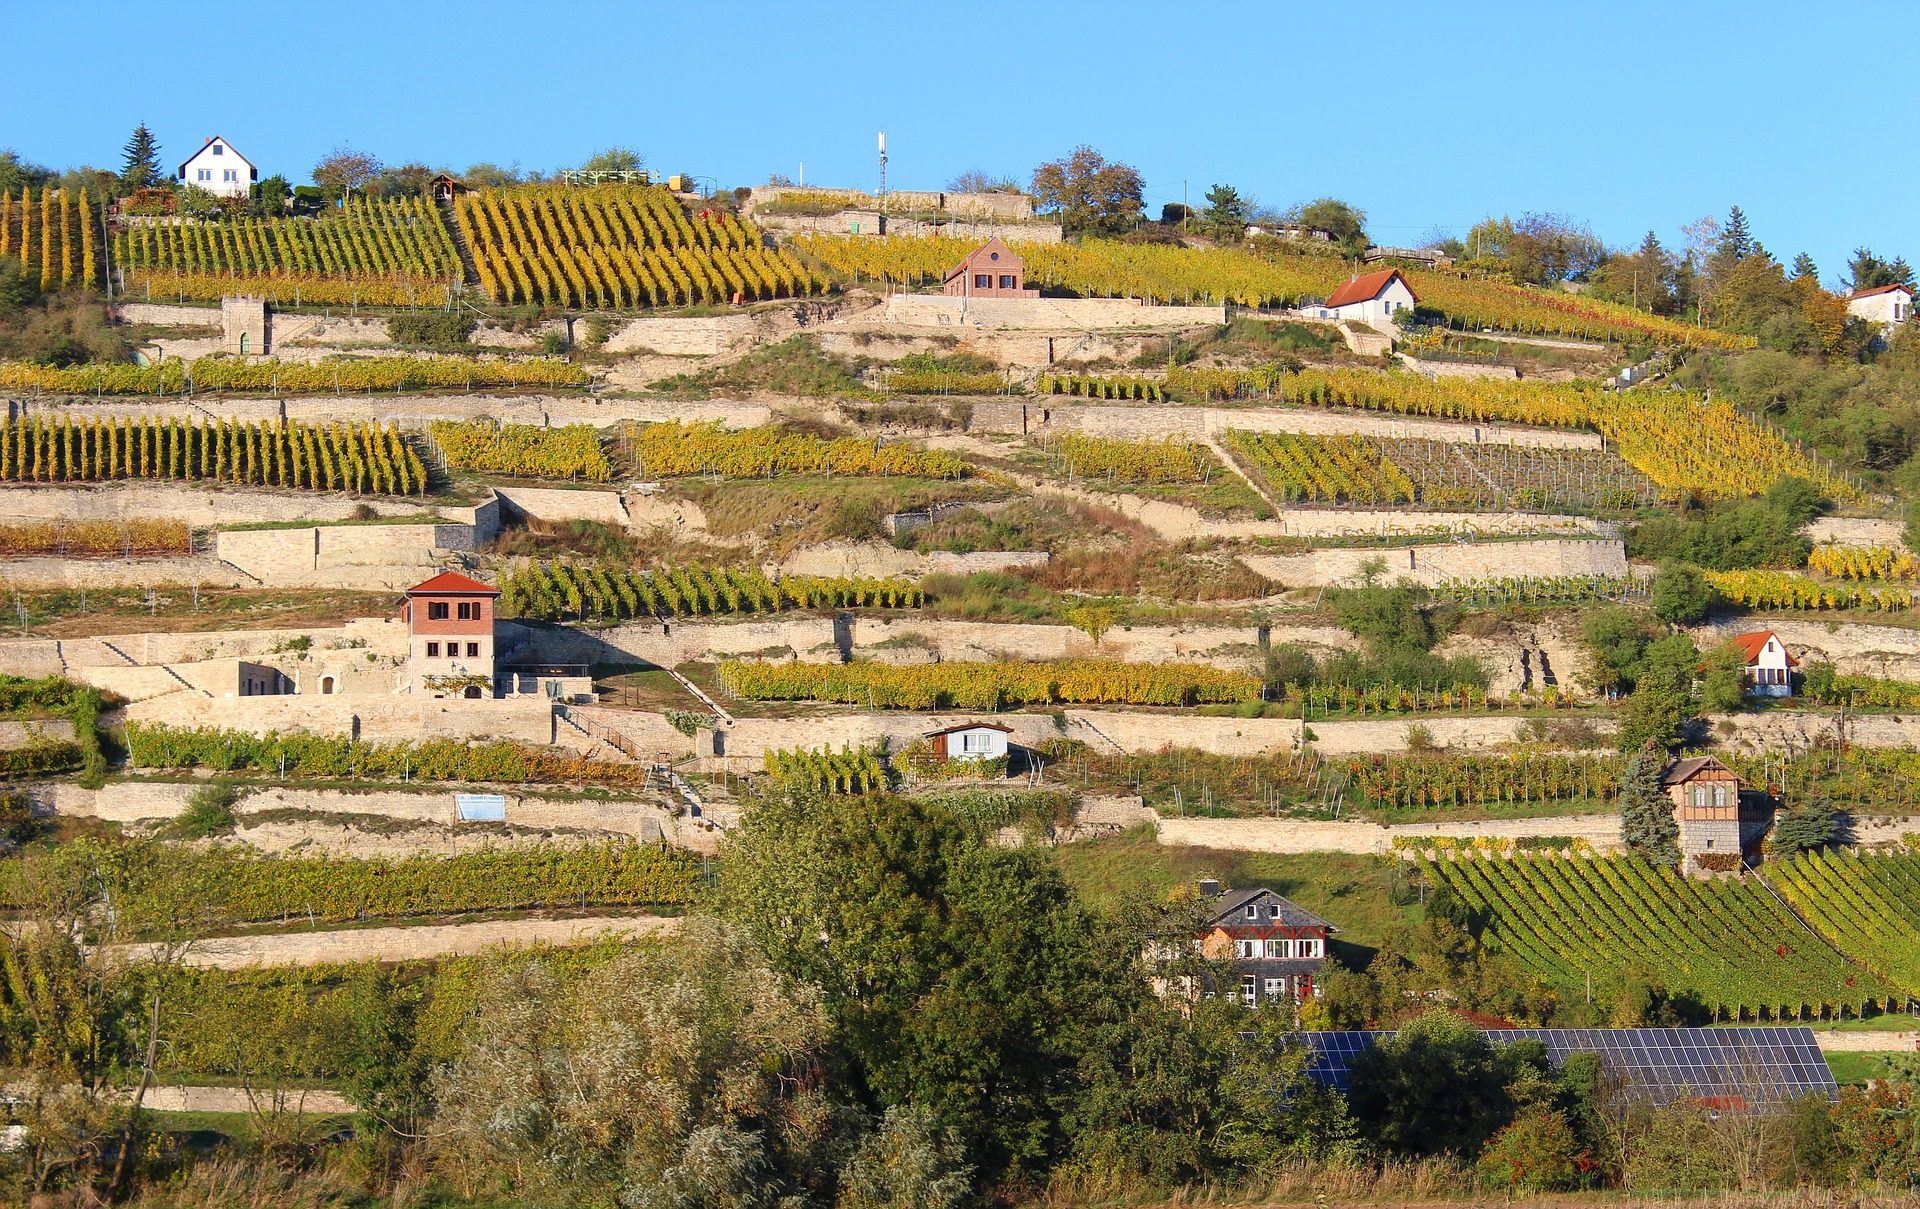 Weinbaugebiet